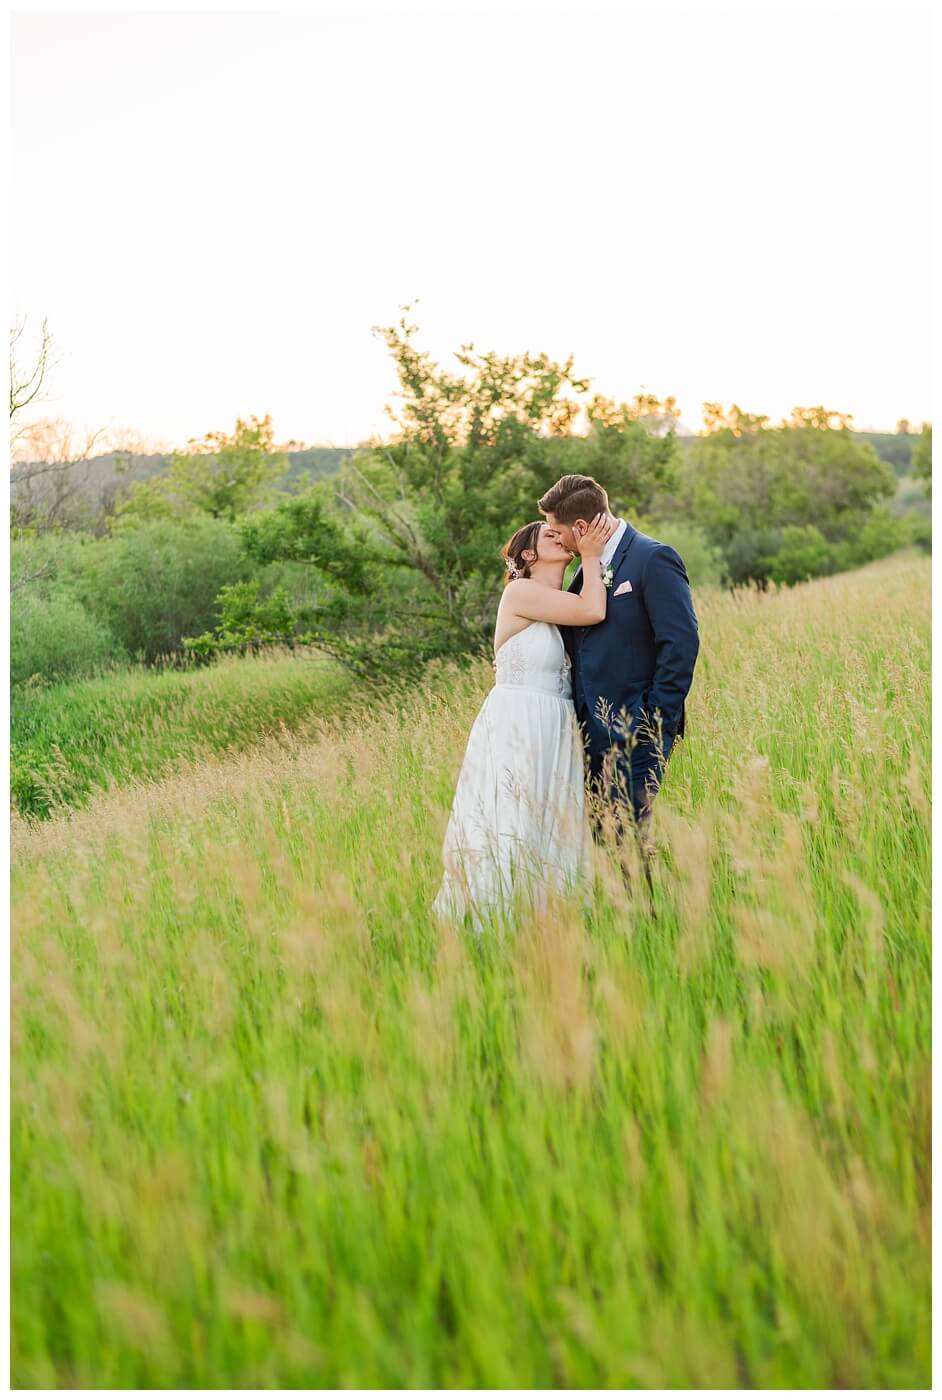 Tris & Jana - Lumsden Wedding - 40 - Bride & Groom stand in tall grass near Lumsden